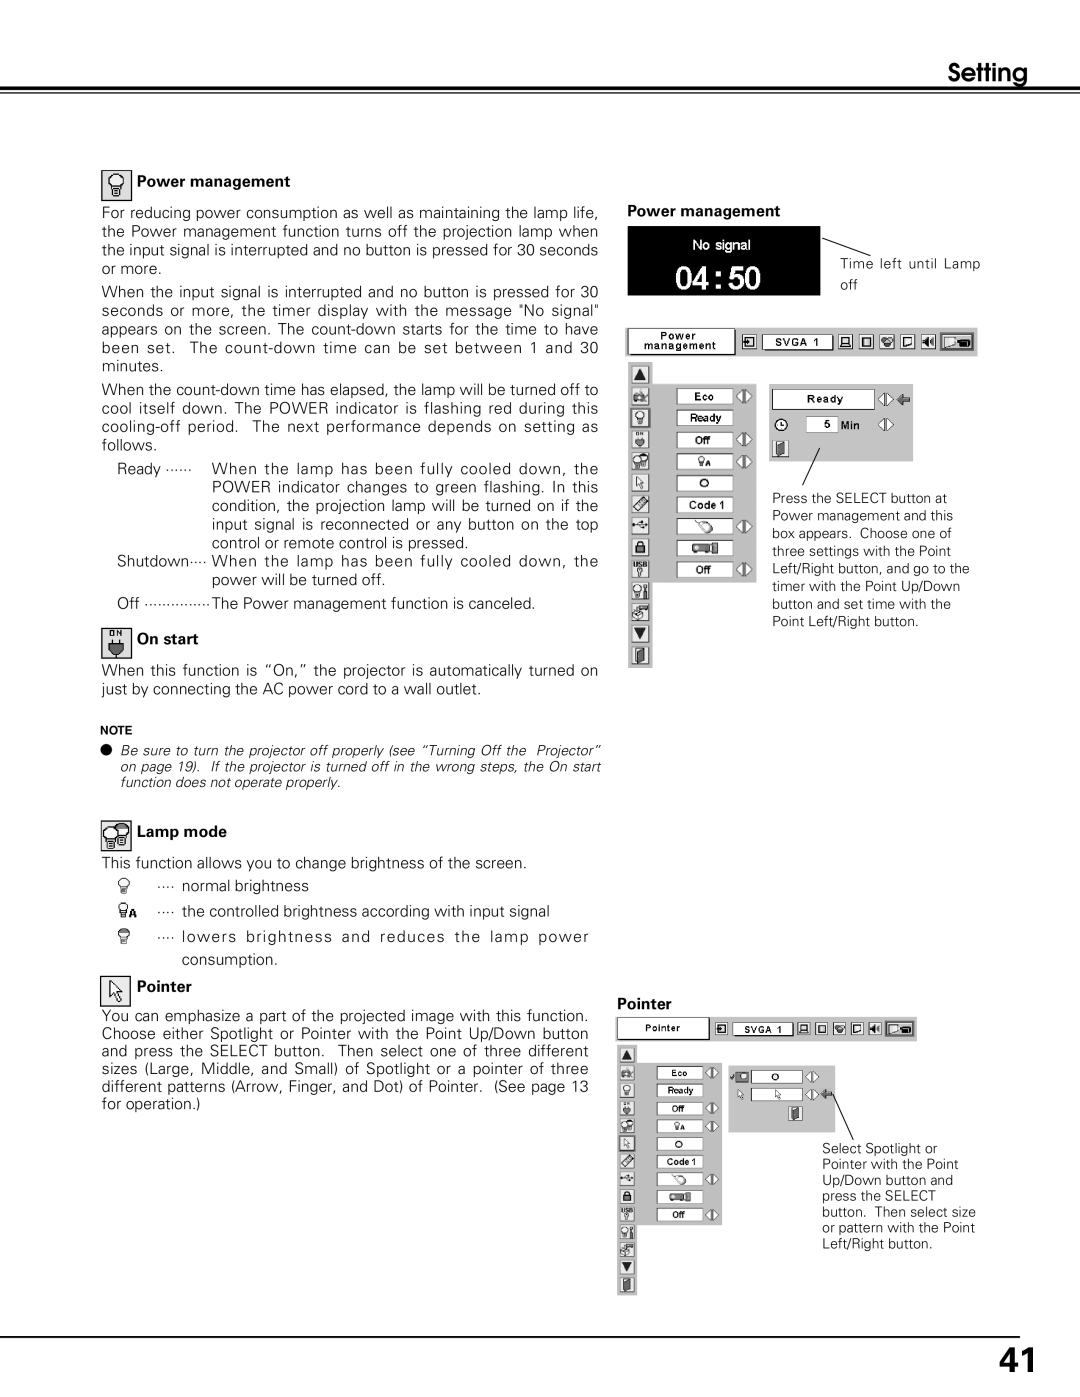 Black Box LC-XE10 instruction manual Setting, Power management, On start, Lamp mode, Pointer Pointer 